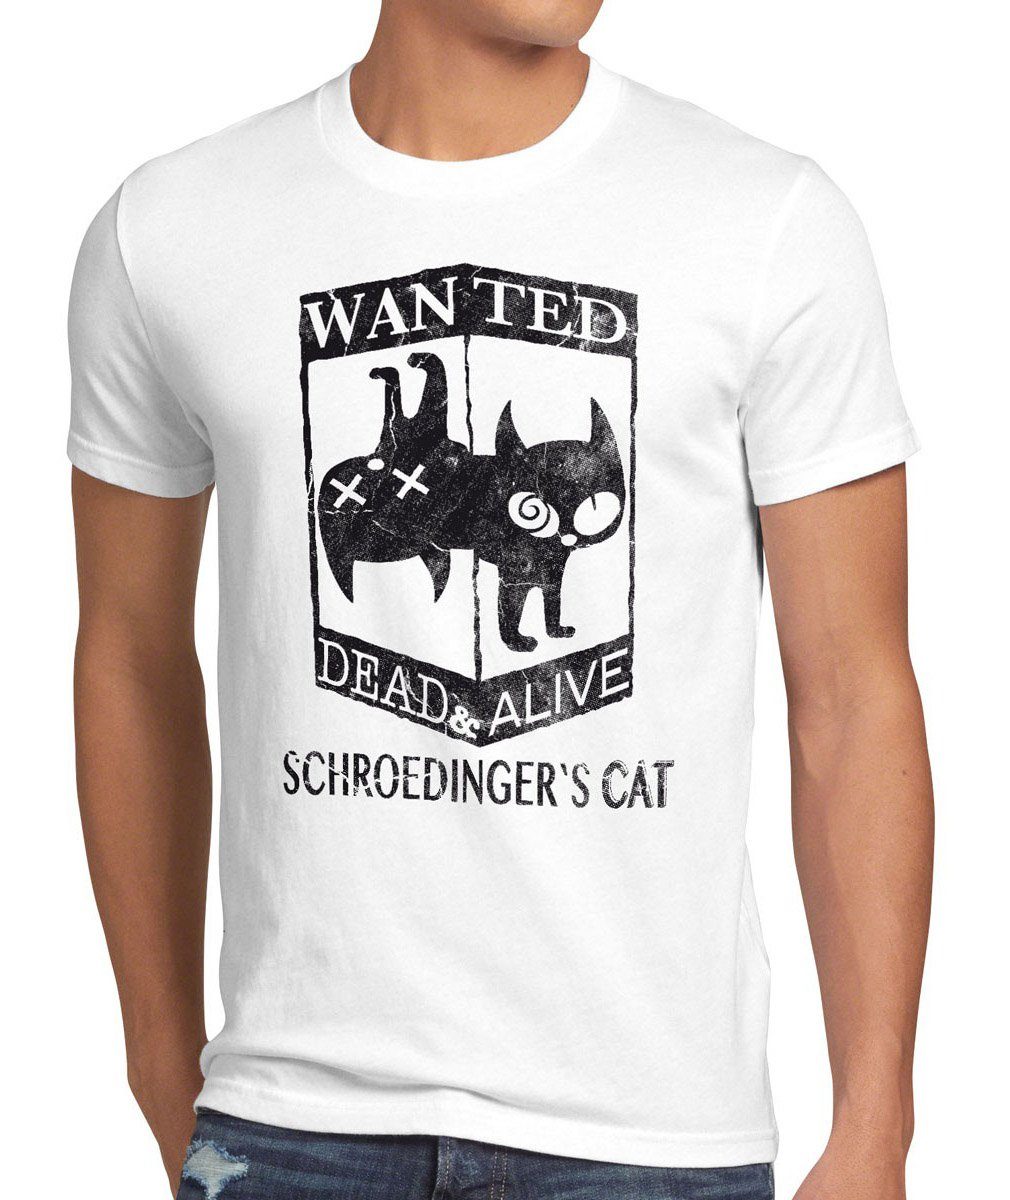 style3 Print-Shirt Herren weiß cooper sheldon theory T-Shirt top bang Wanted Schroedingers cat Katze big